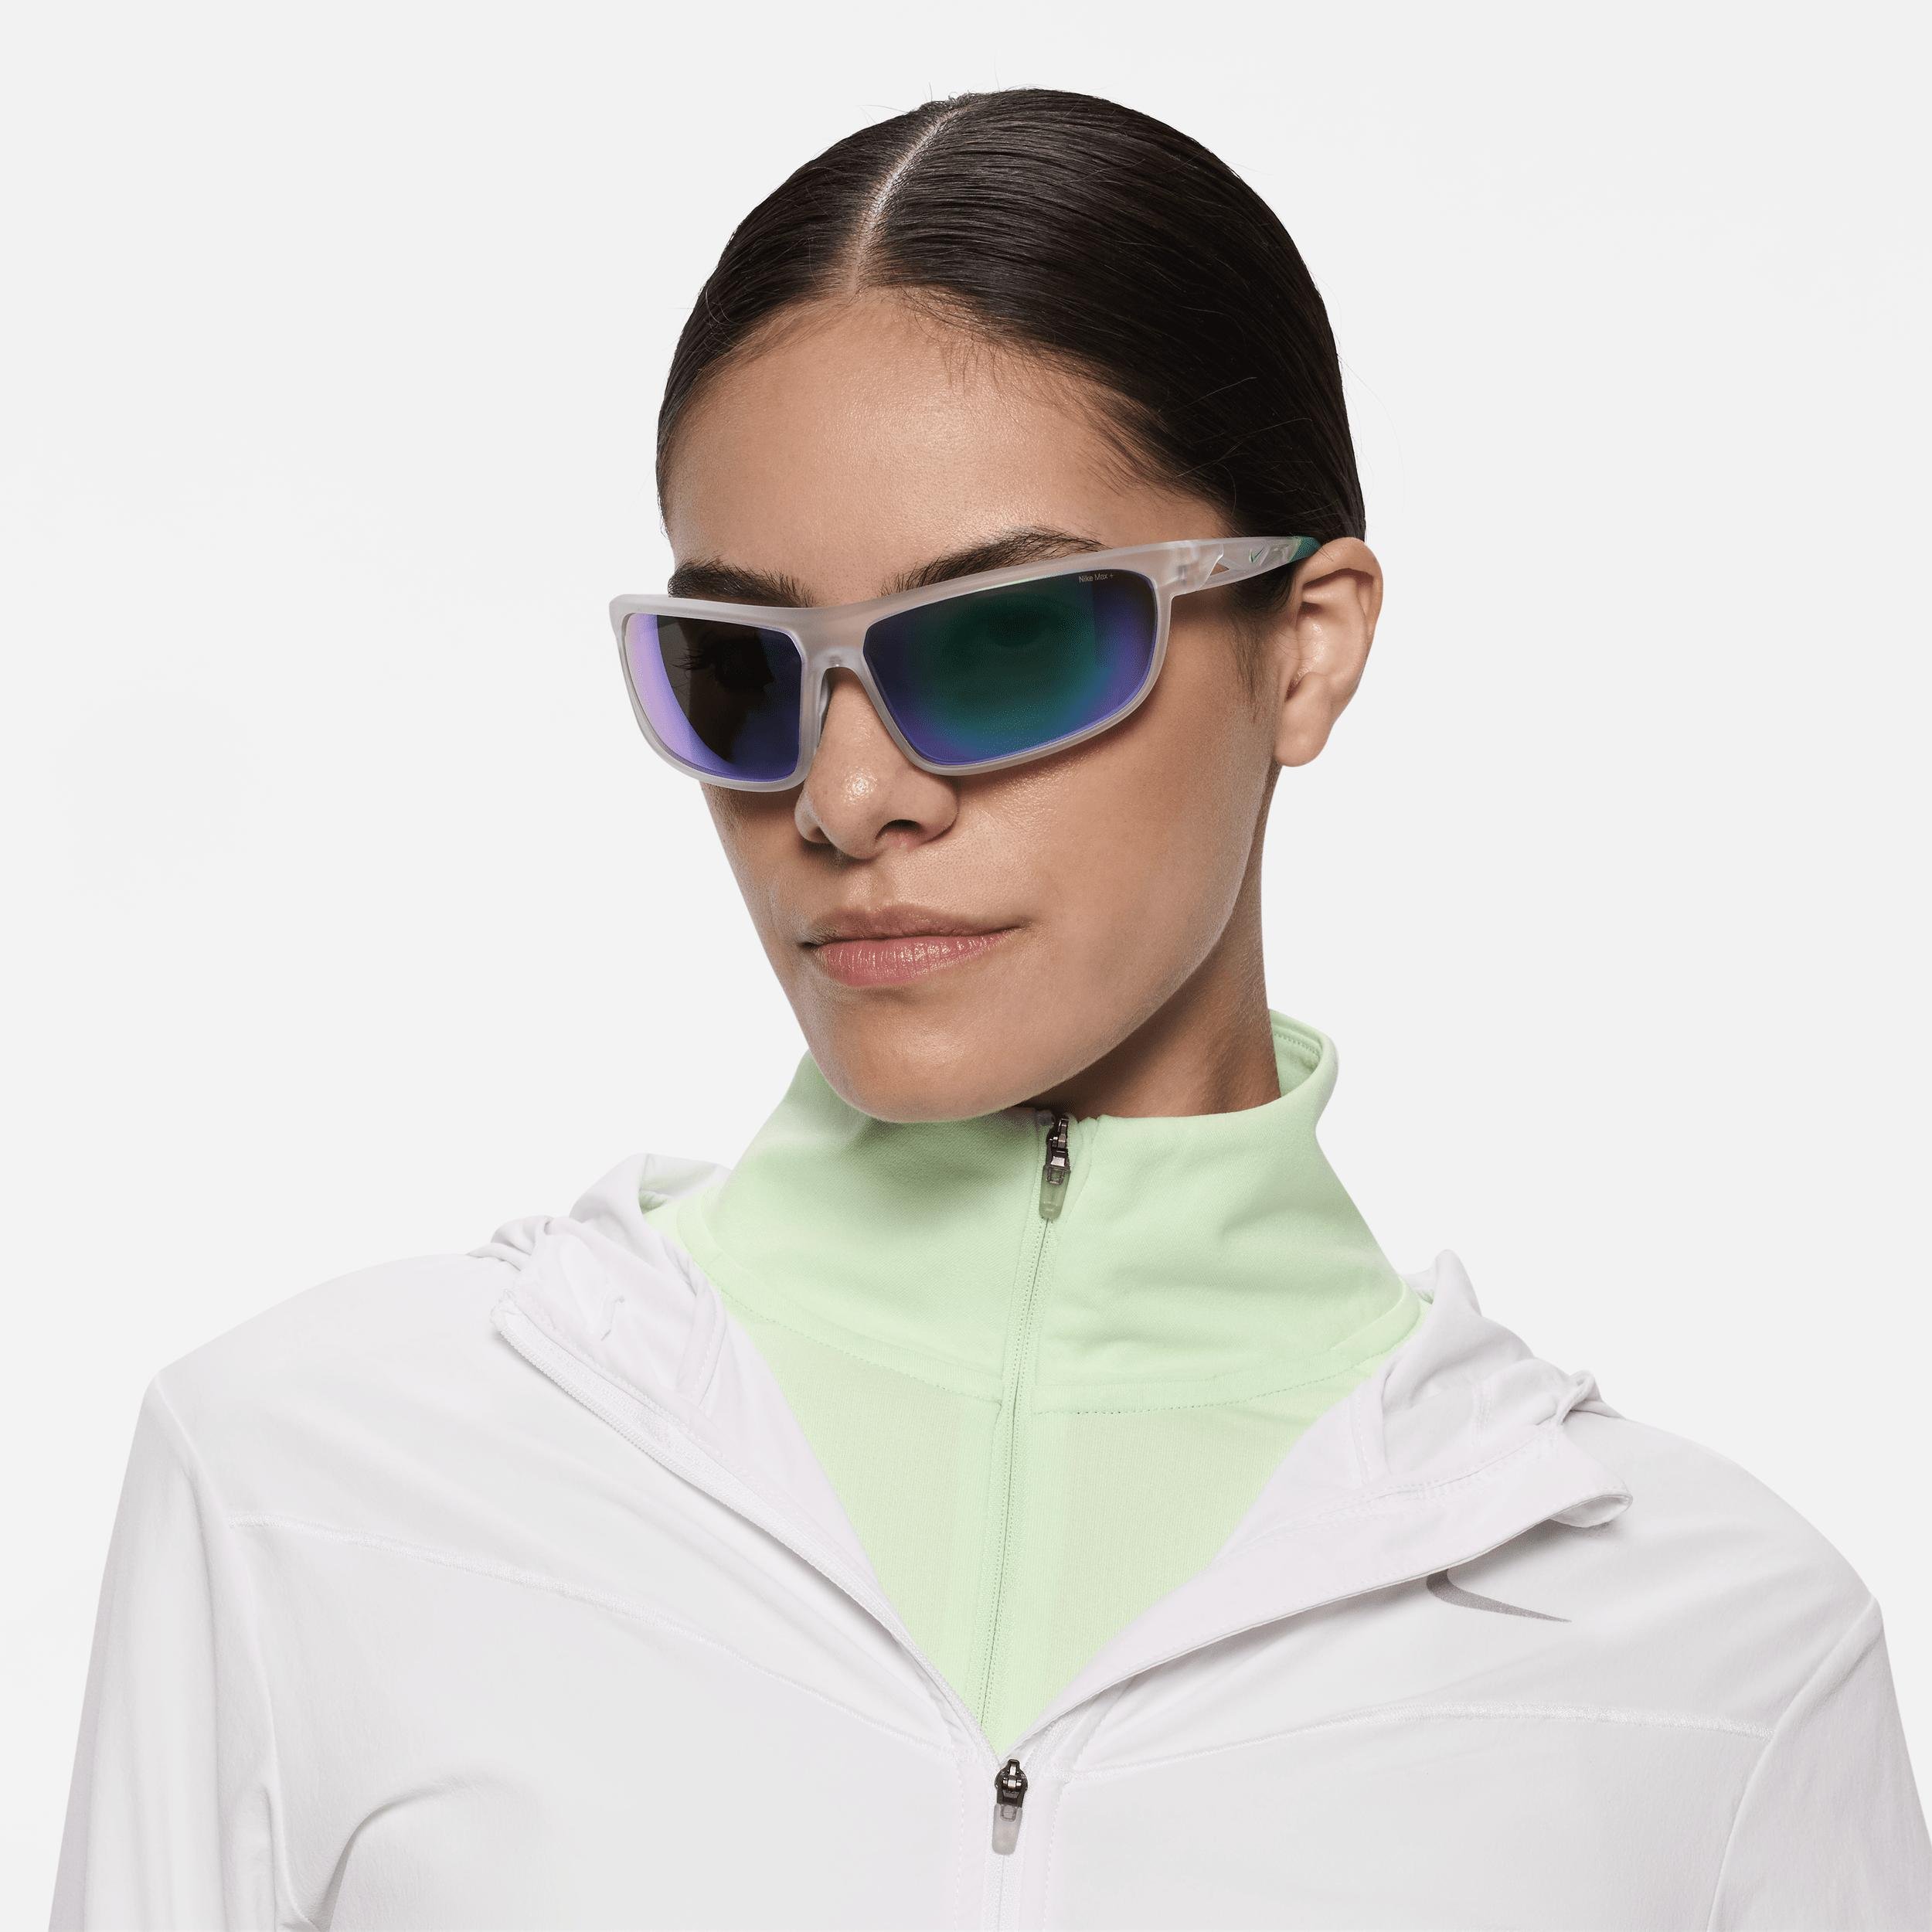 Nike Unisex Windtrack Run Mirrored Sunglasses by NIKE